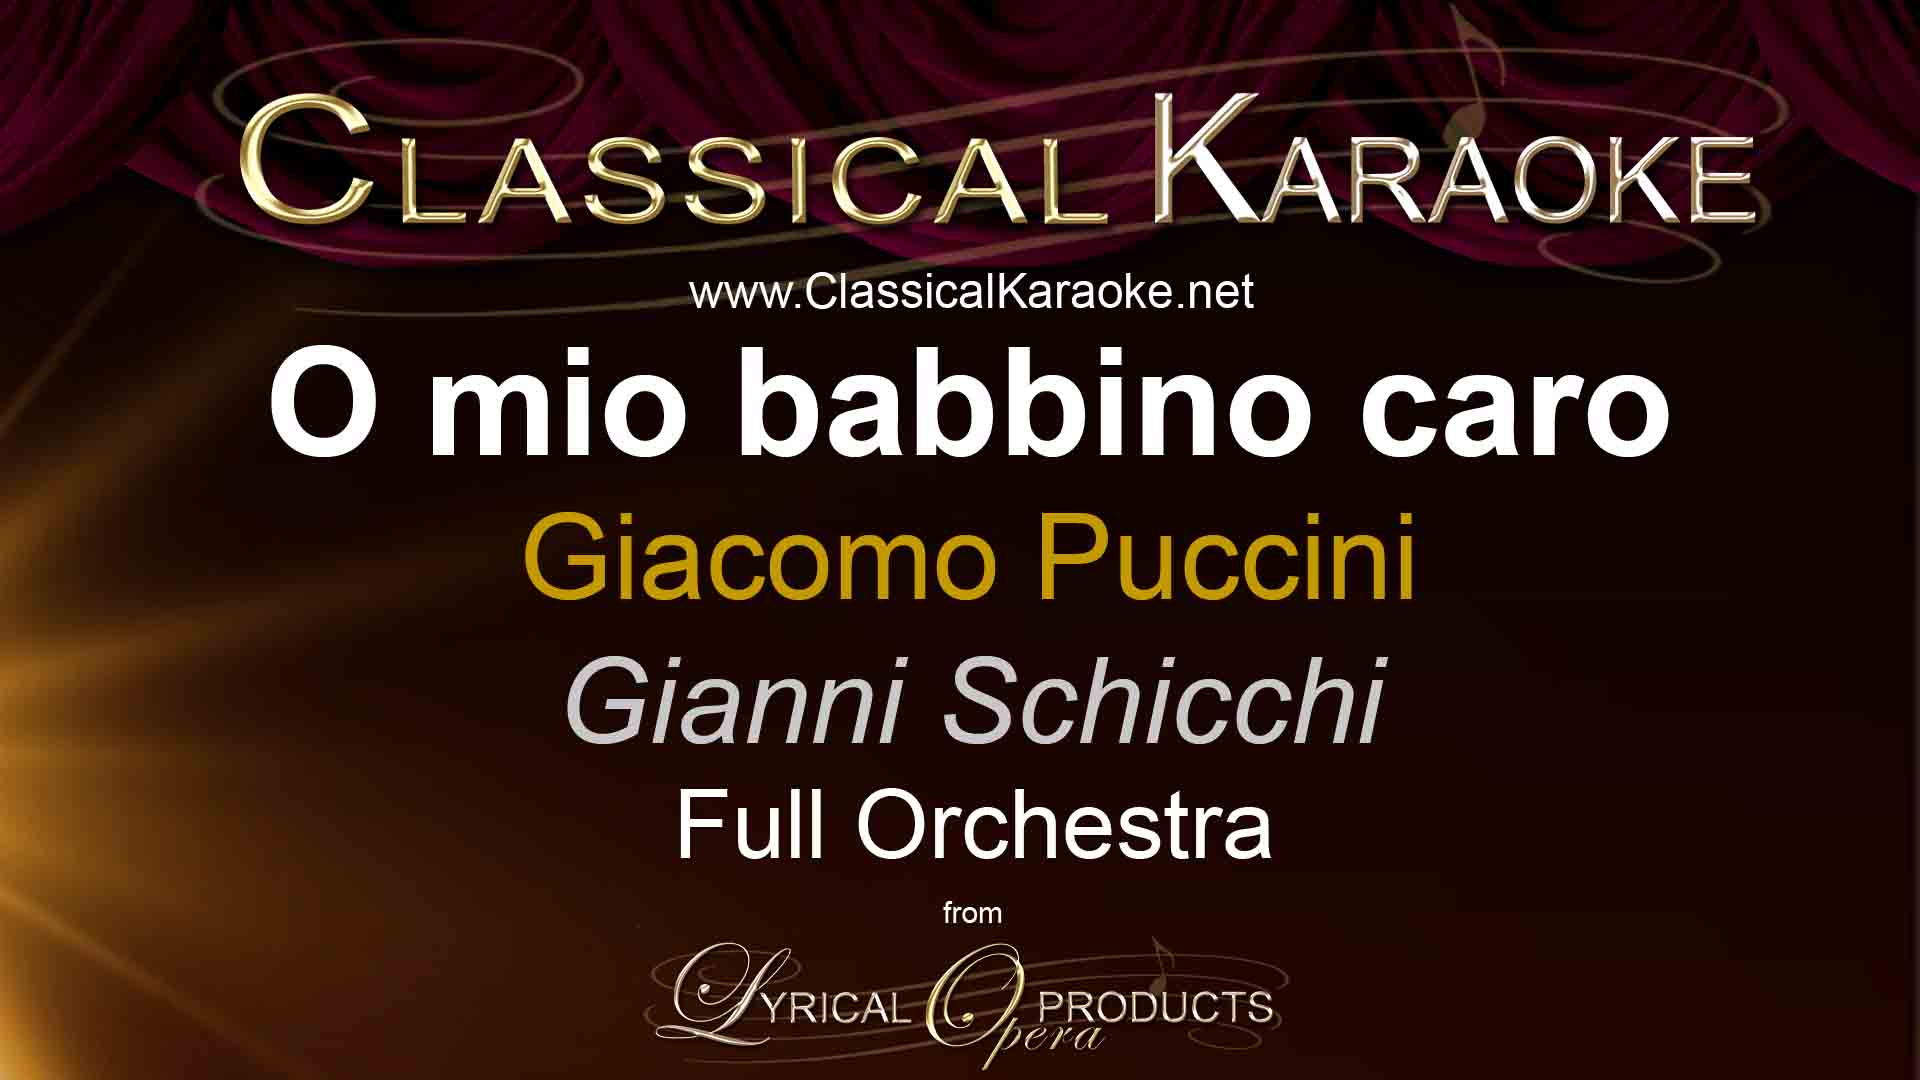 O mio babbino caro, from Gianni Schicchi, Full Orchestral Accompaniment (karaoke) track